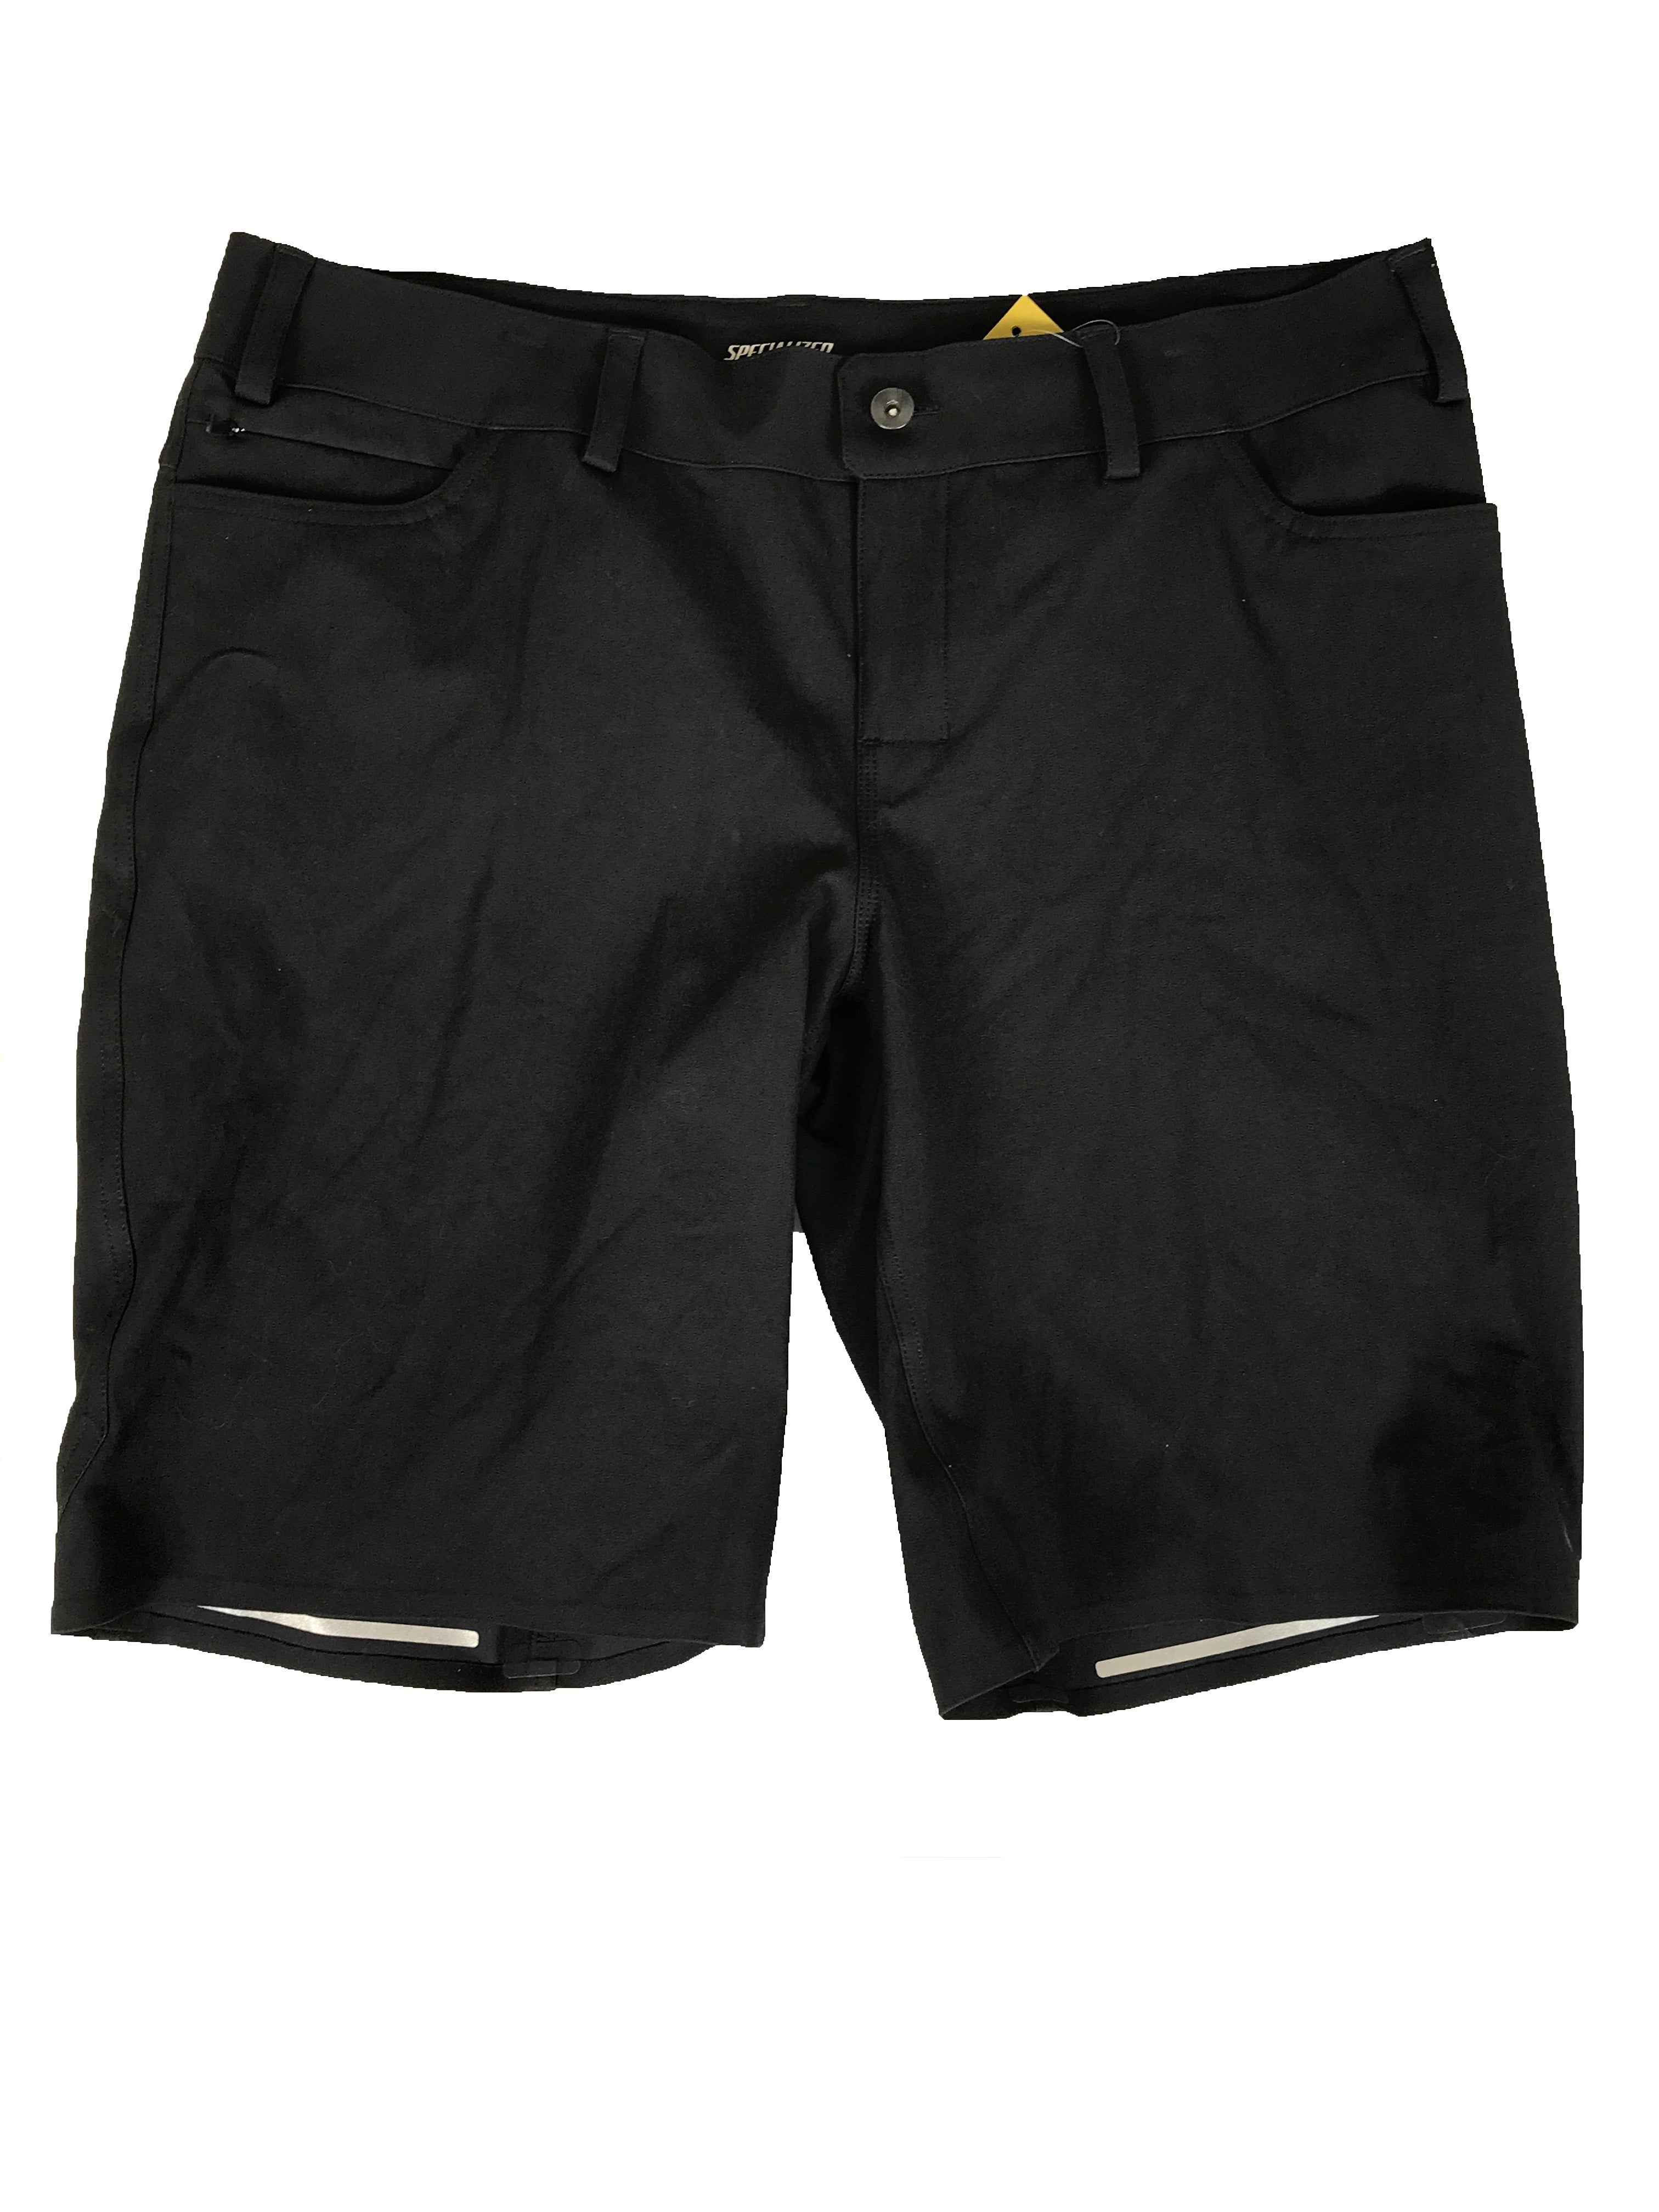 Specialized RBX ADV Black Shorts Men's Size 40 NWT